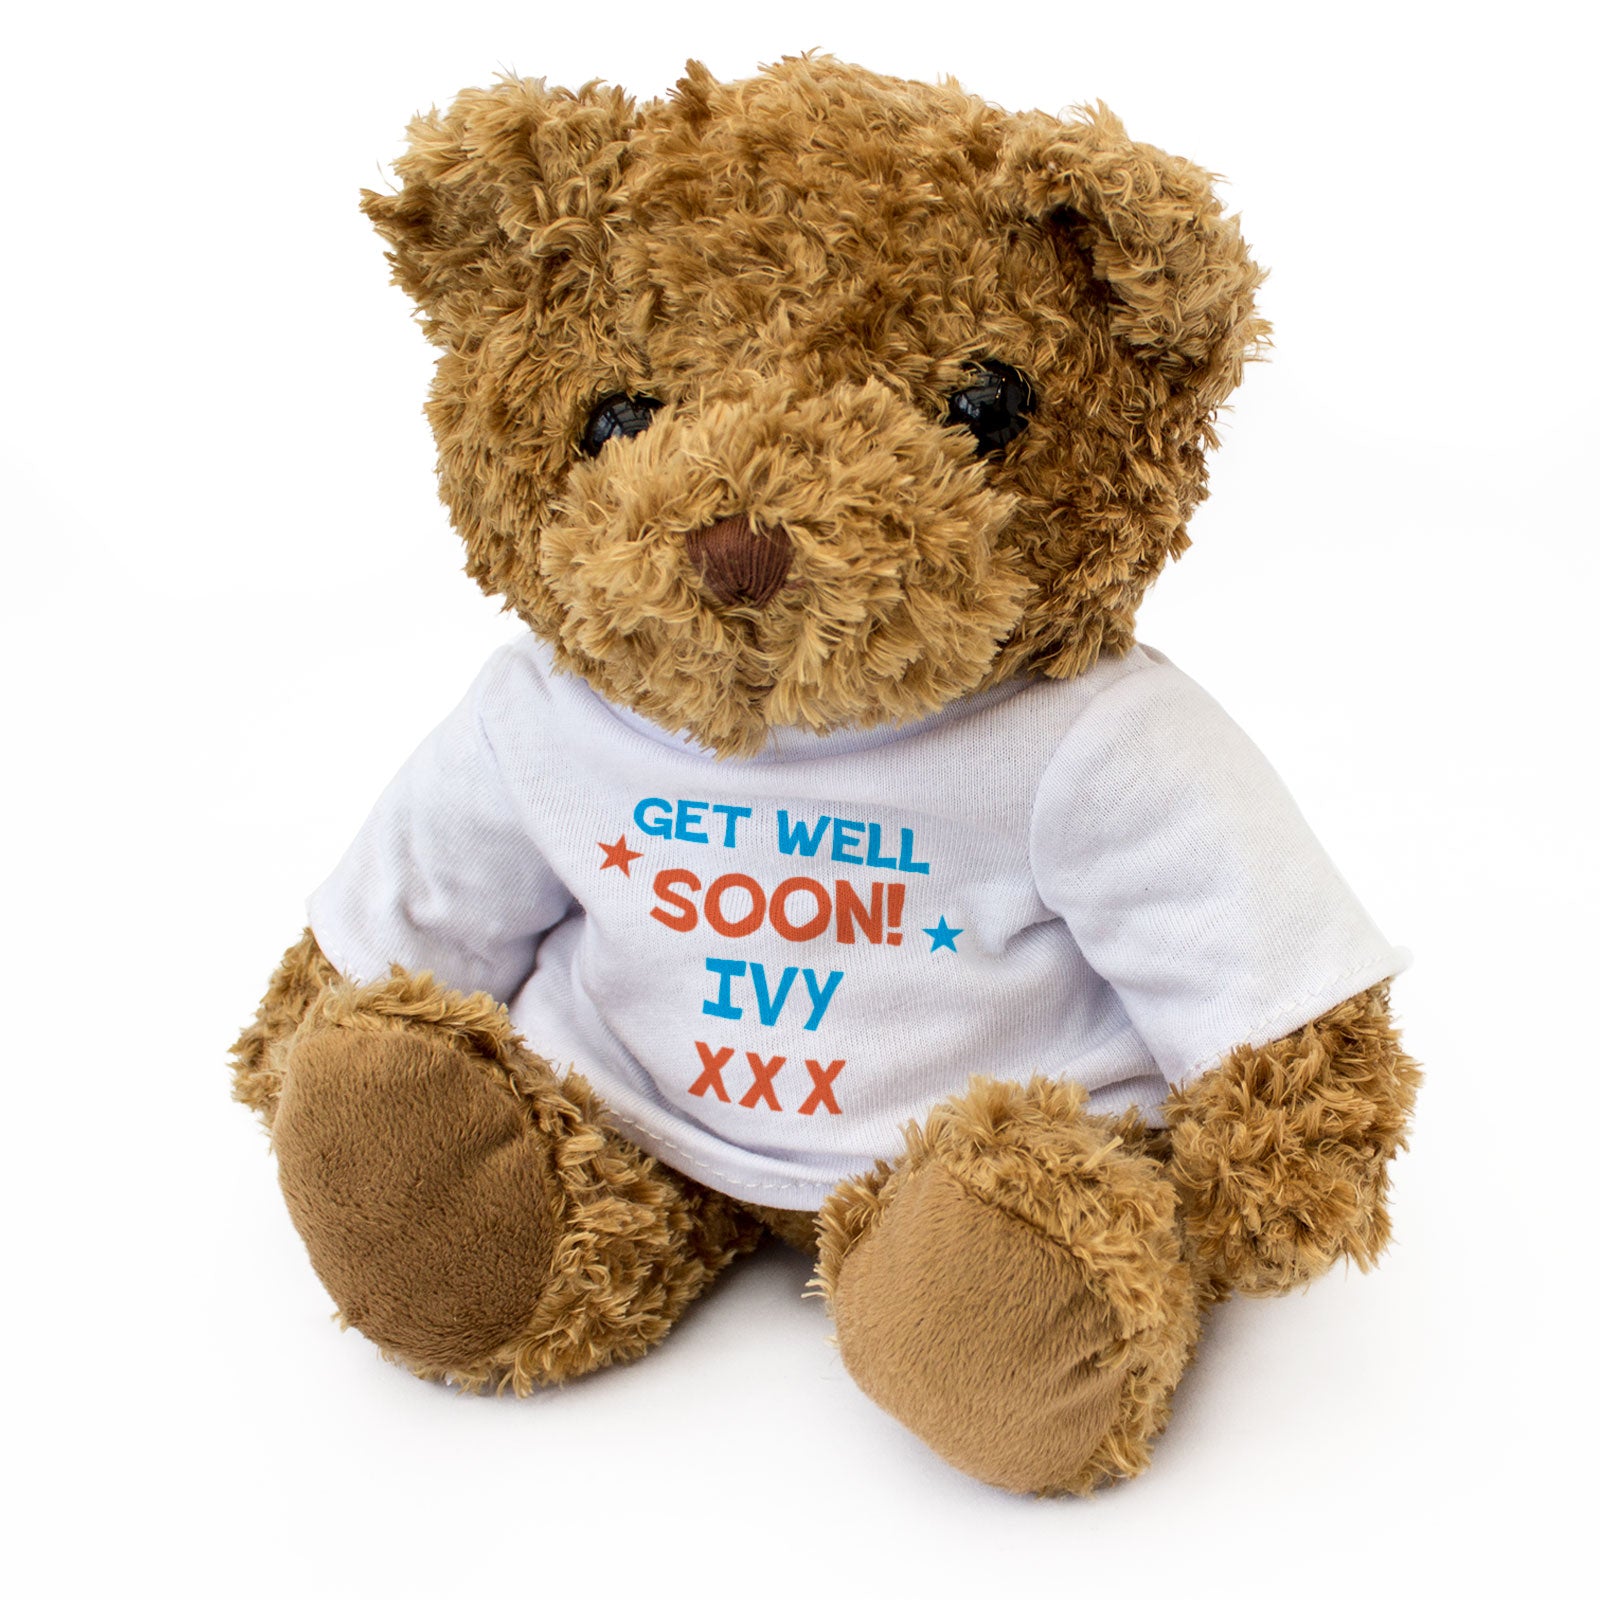 Get Well Soon Ivy - Teddy Bear